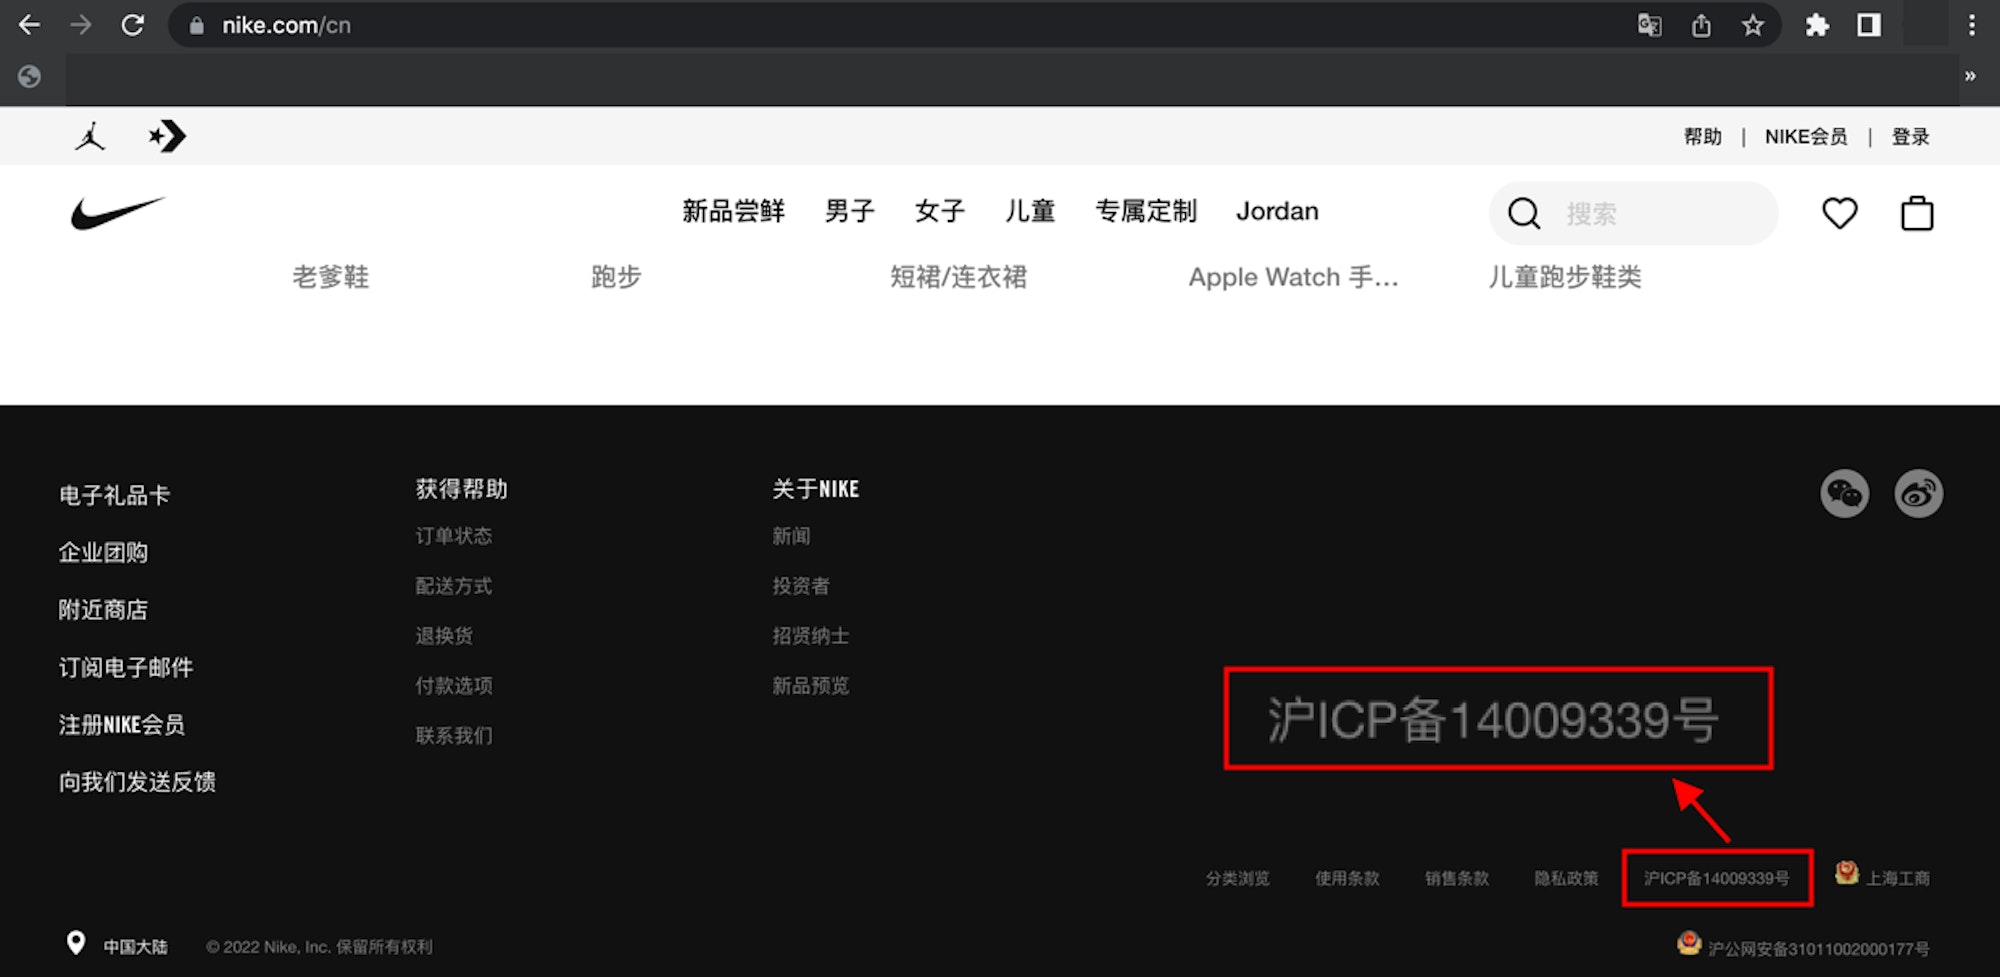 ICP example of Nike.com